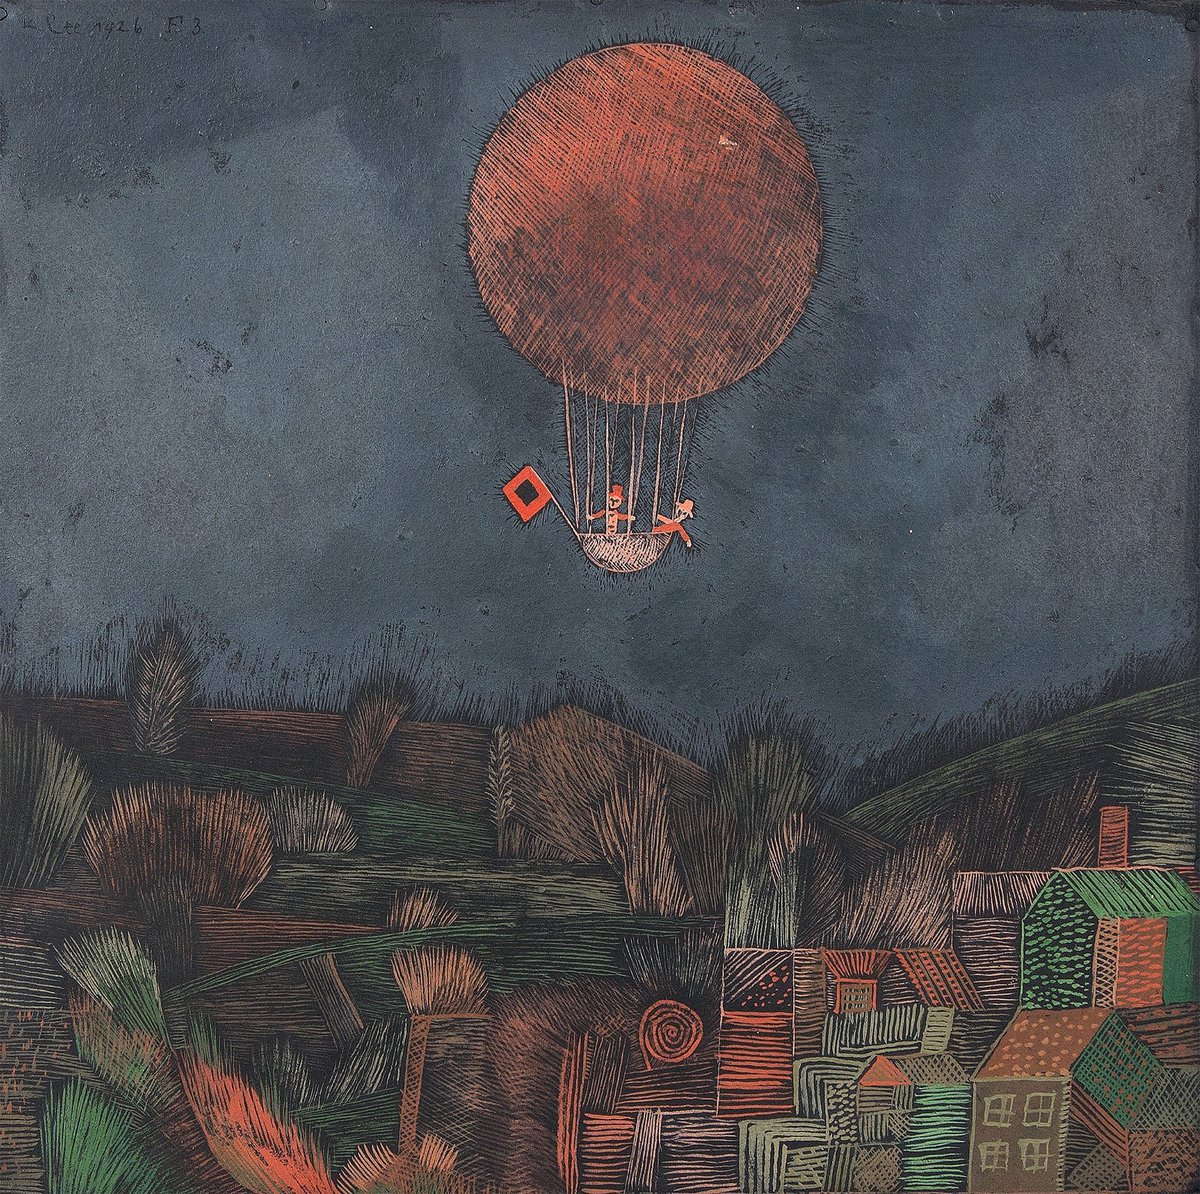 Paul Klee: 'The Balloon,' 1926